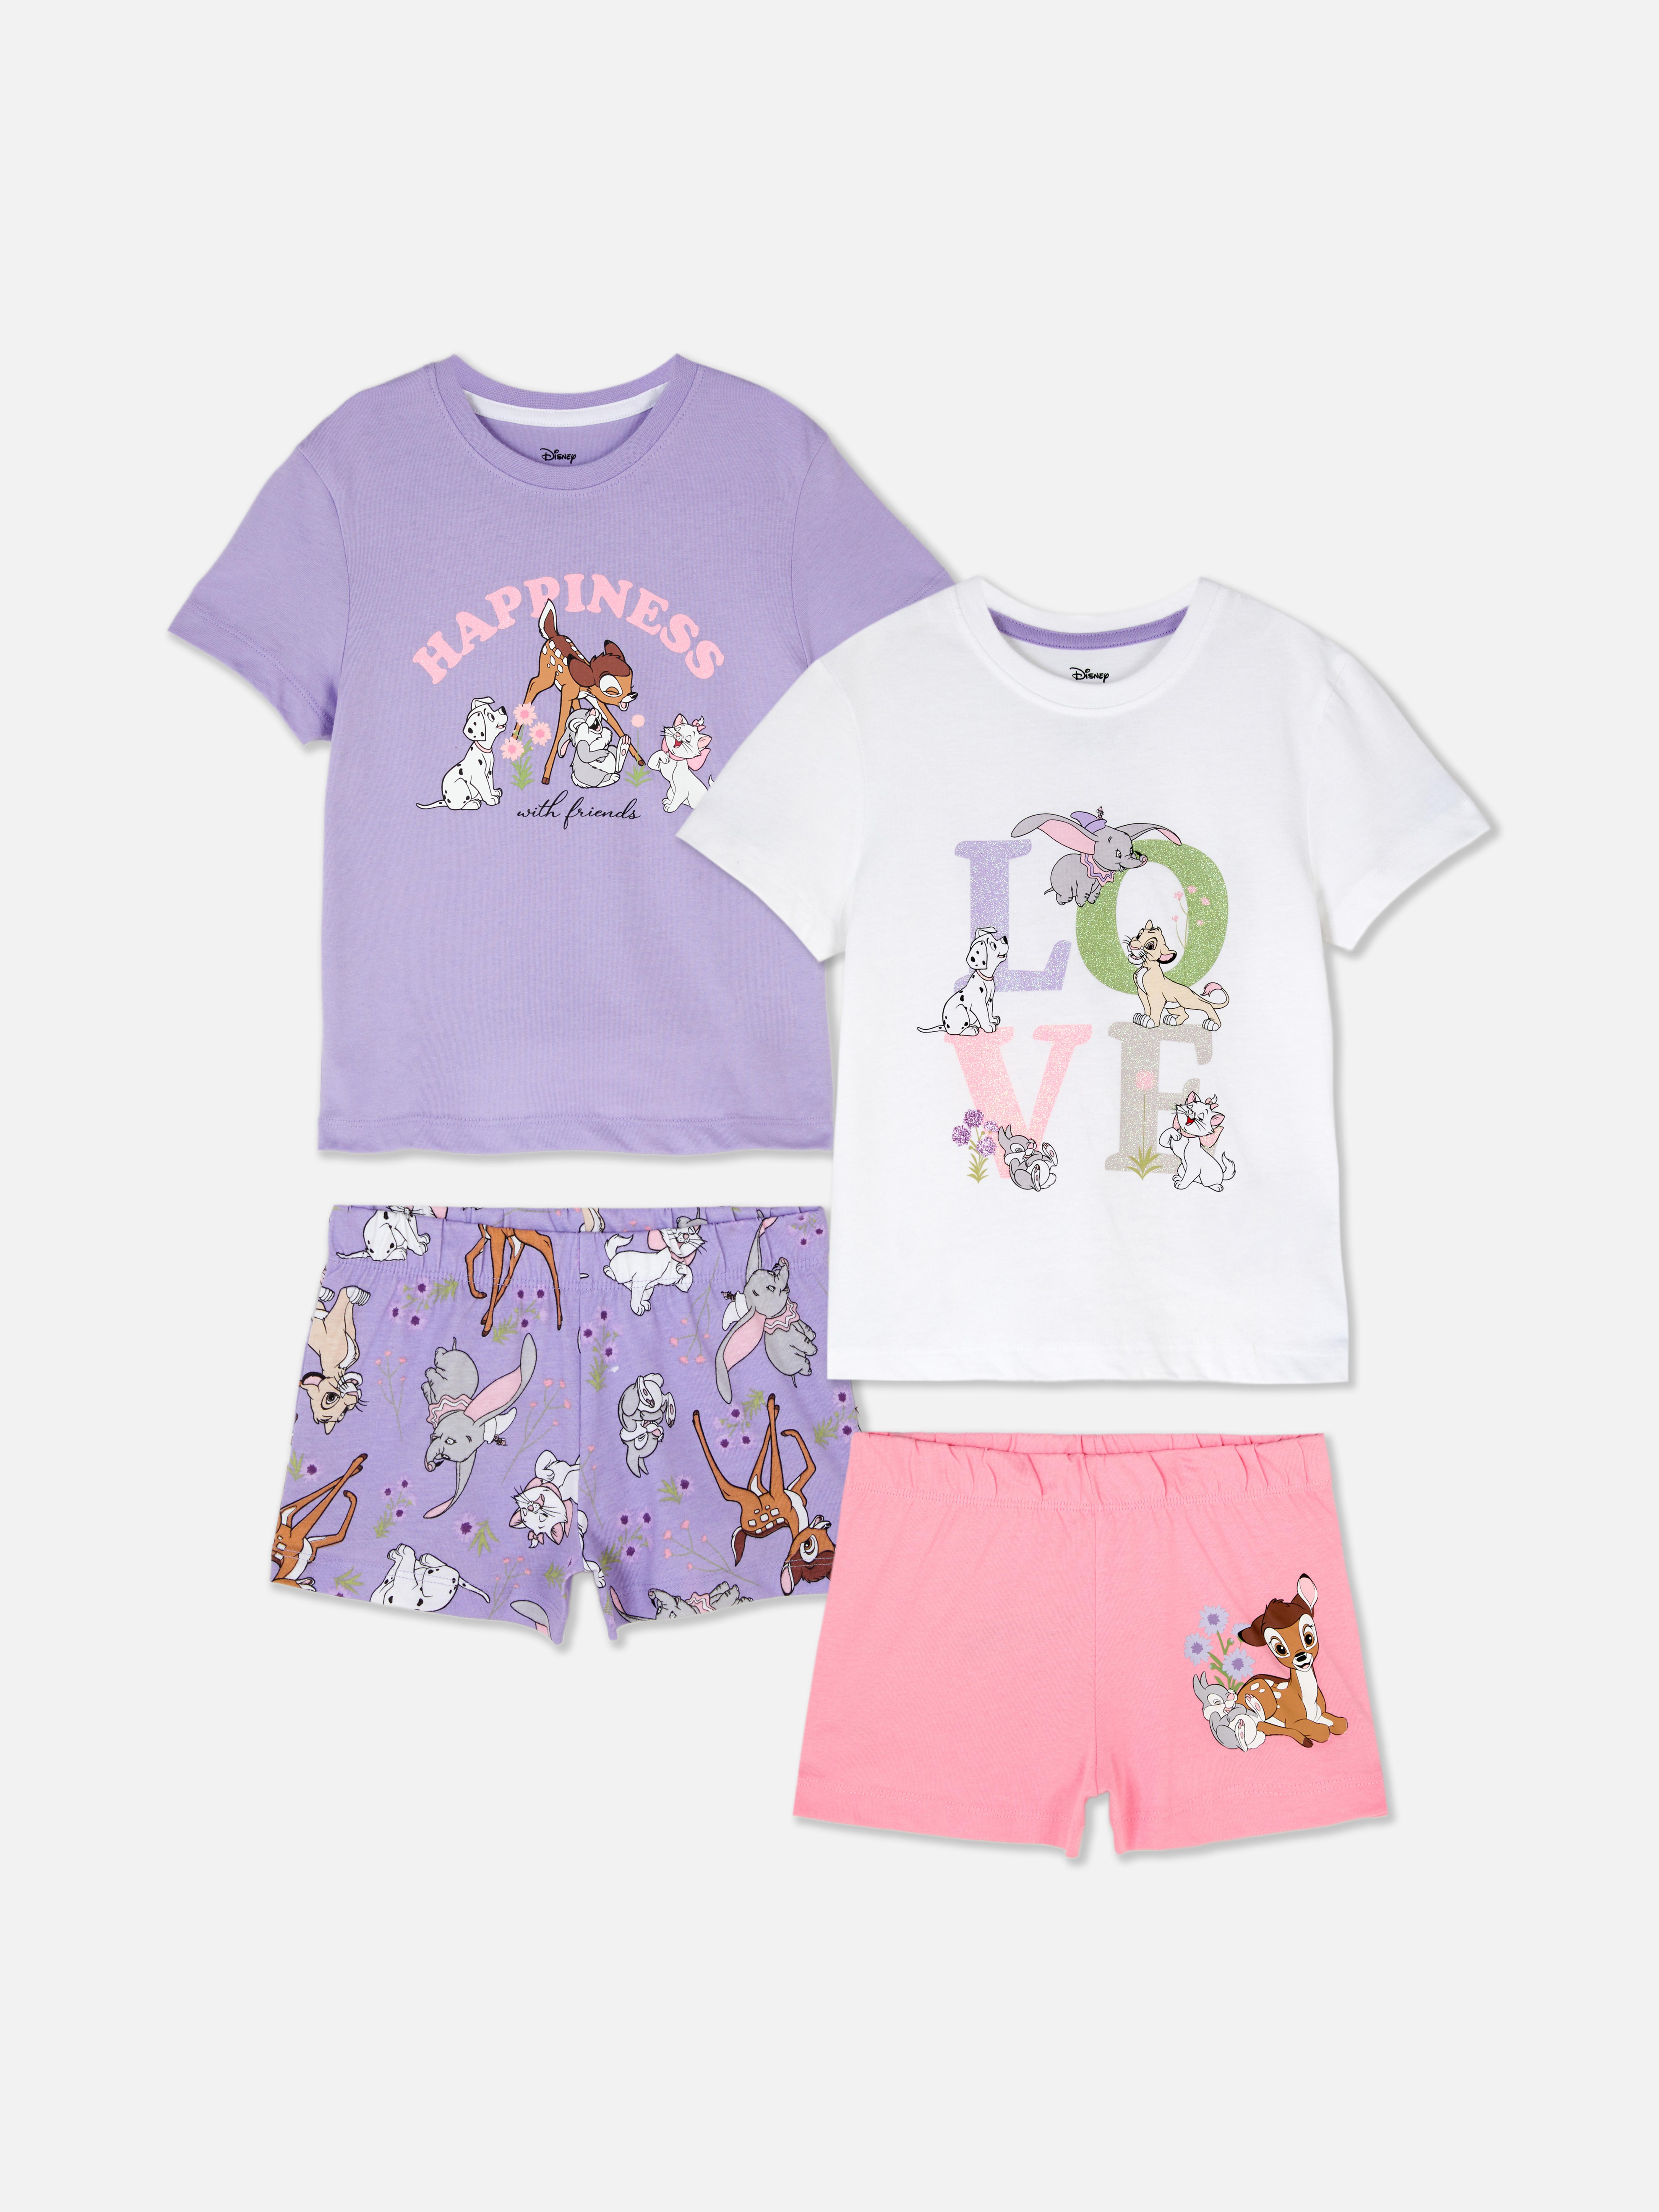 Pack de 2 pijamas de personajes de Disney